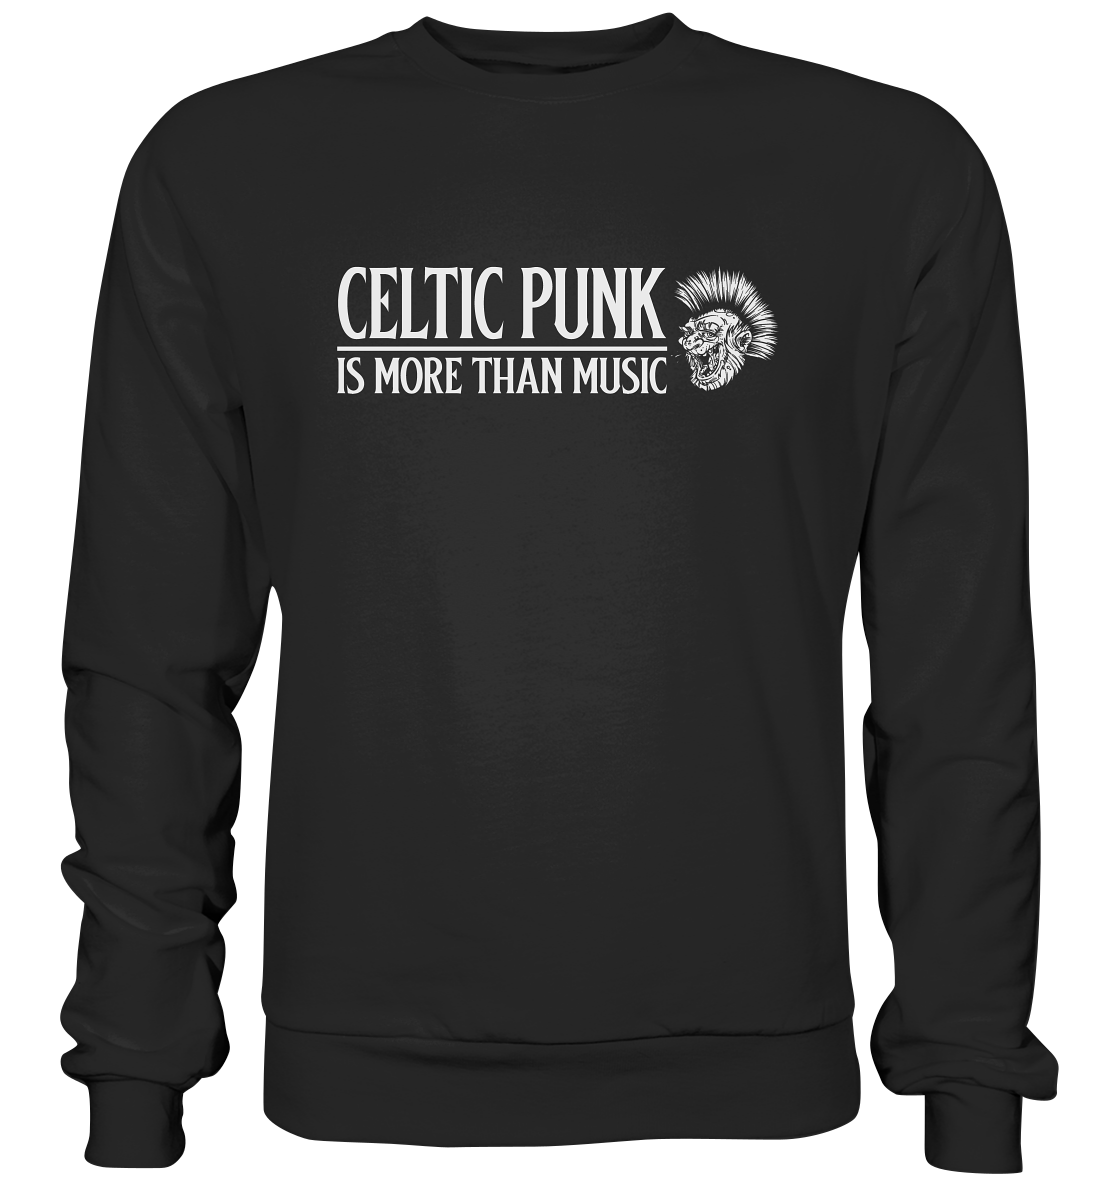 Celtic Punk "Is More Than Music" - Premium Sweatshirt